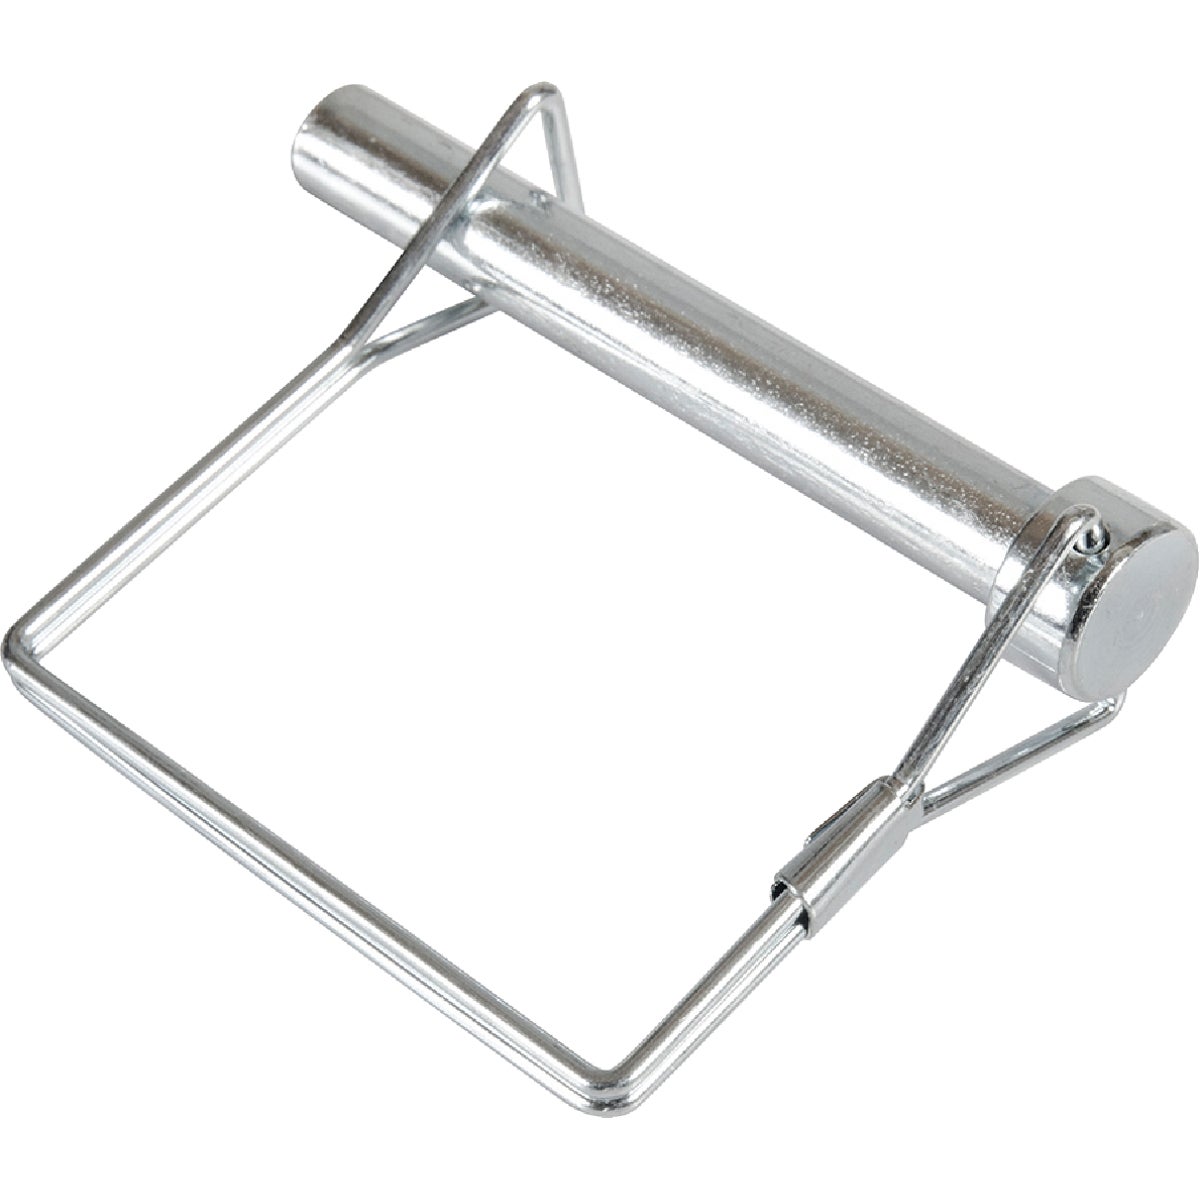 MetalTech Caster Lock Pin